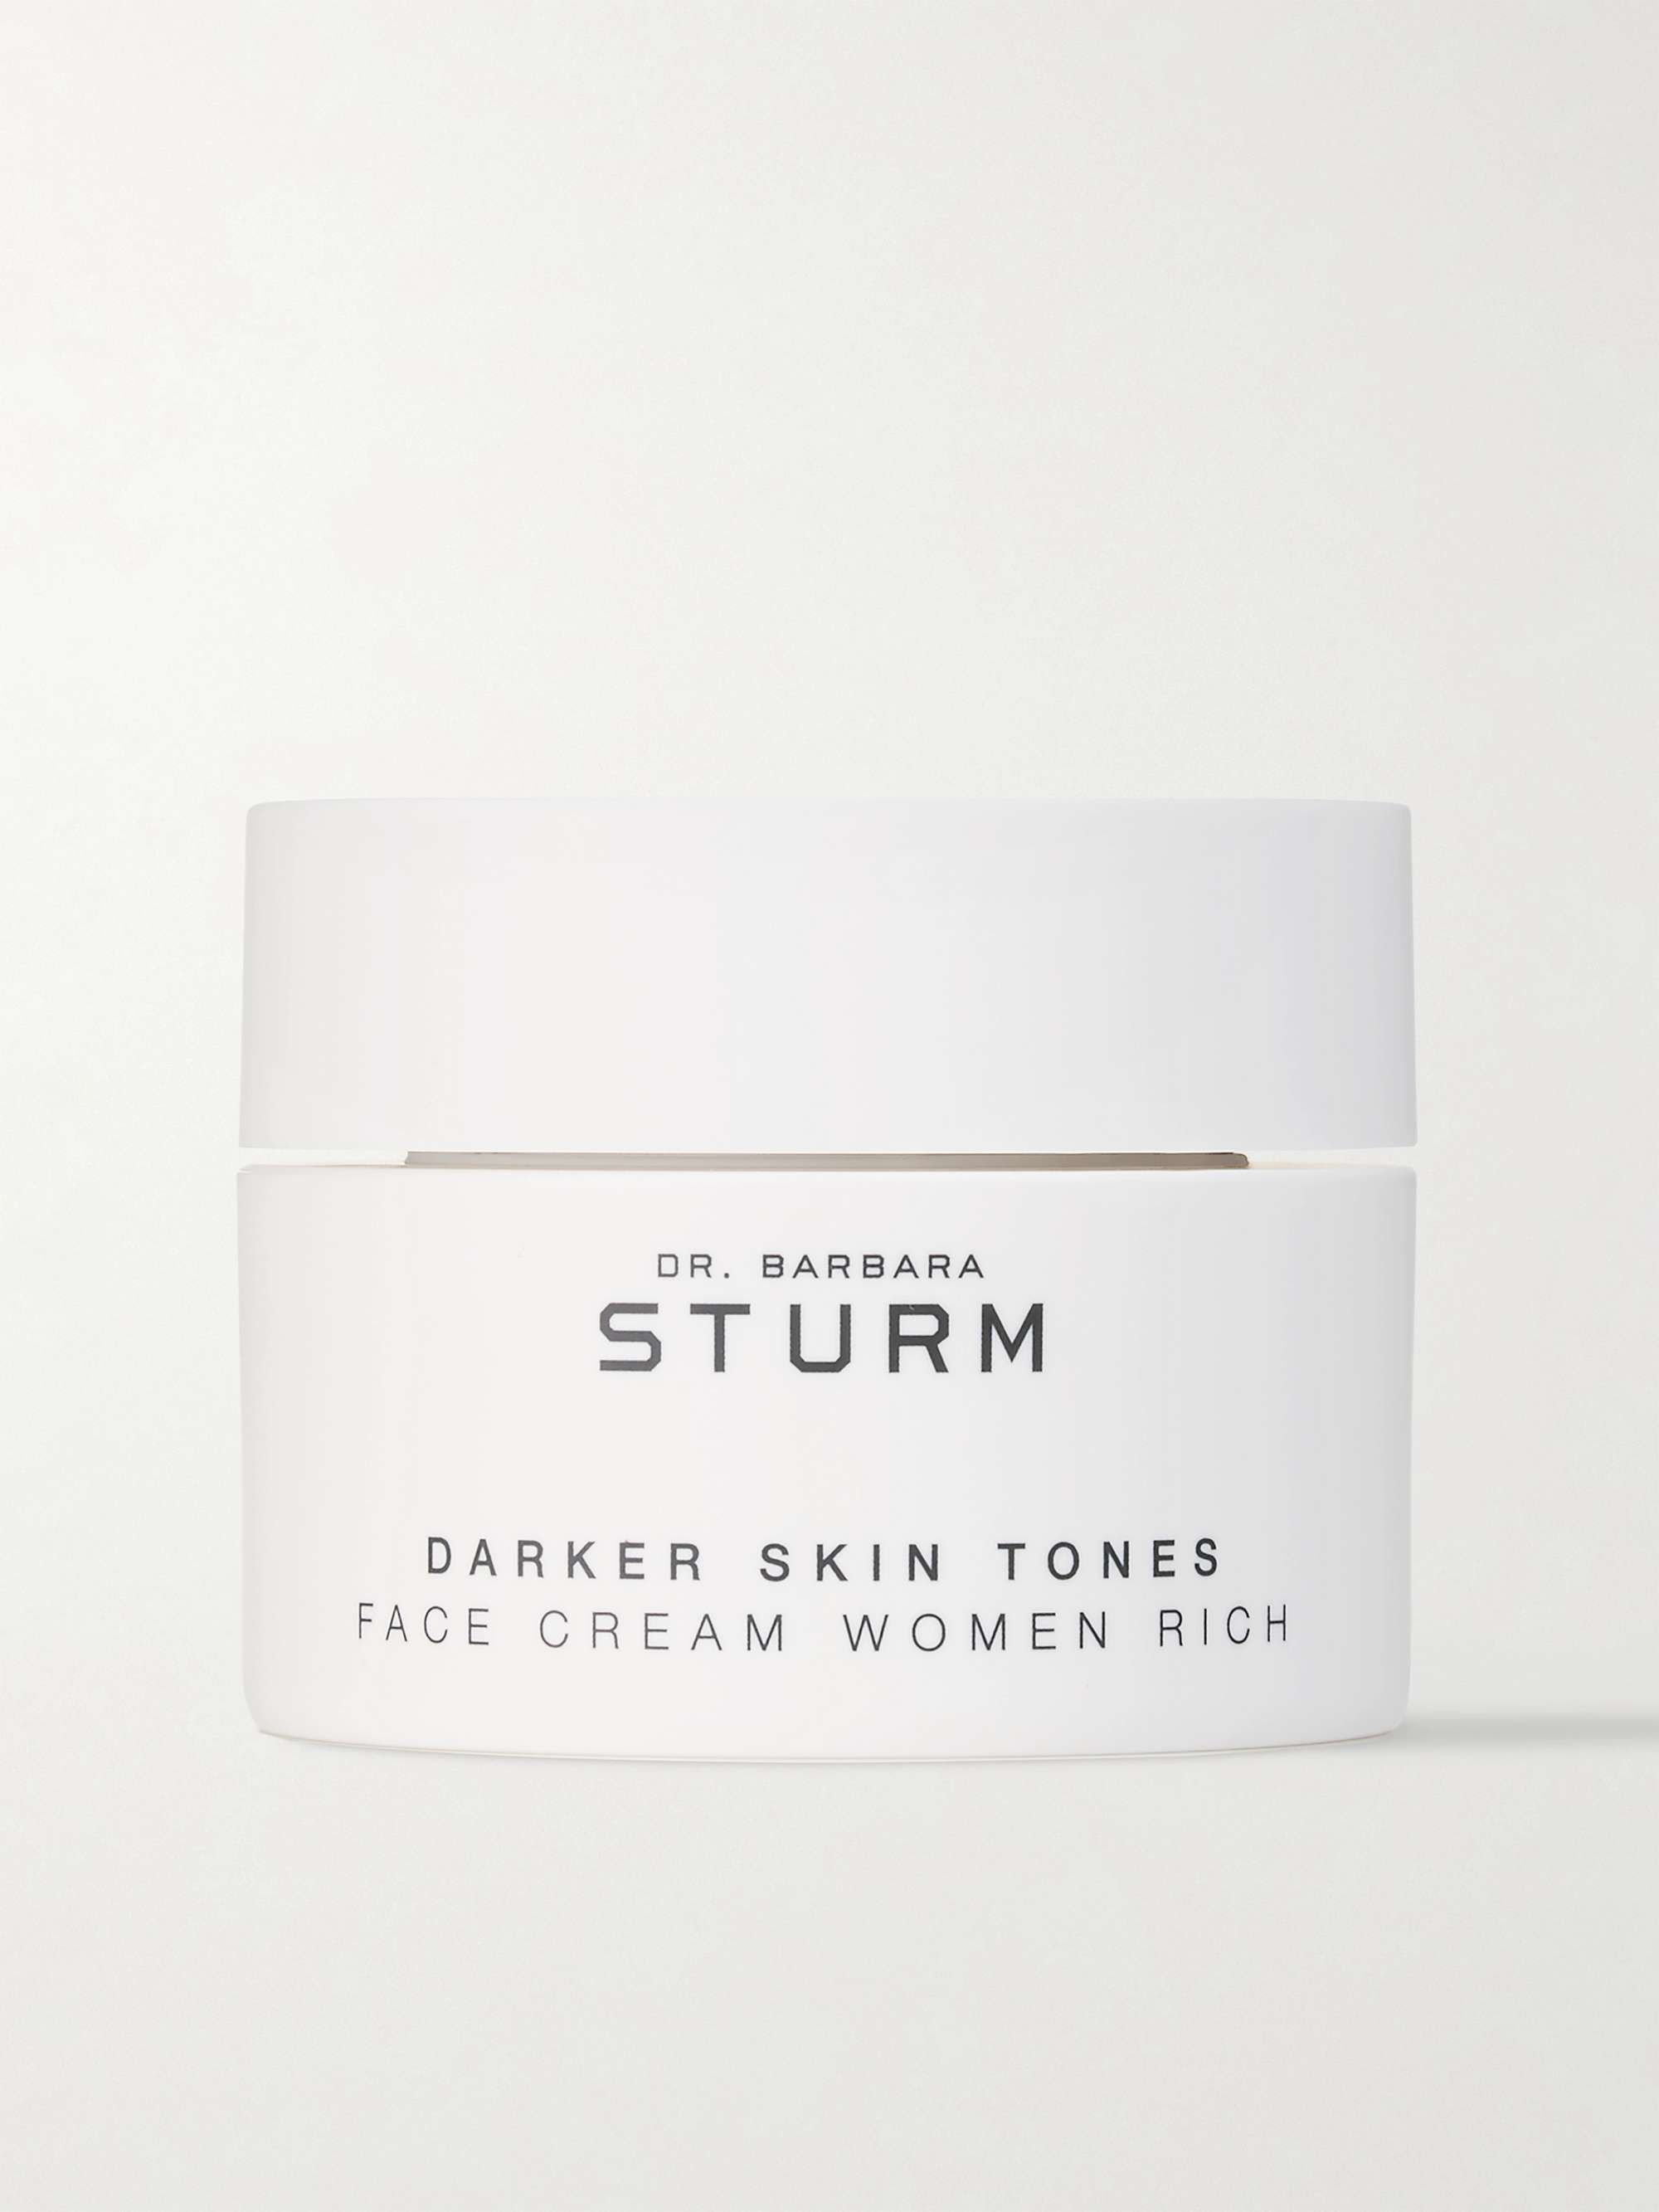 DR. BARBARA STURM Darker Skin Tones Face Cream Rich, 50ml